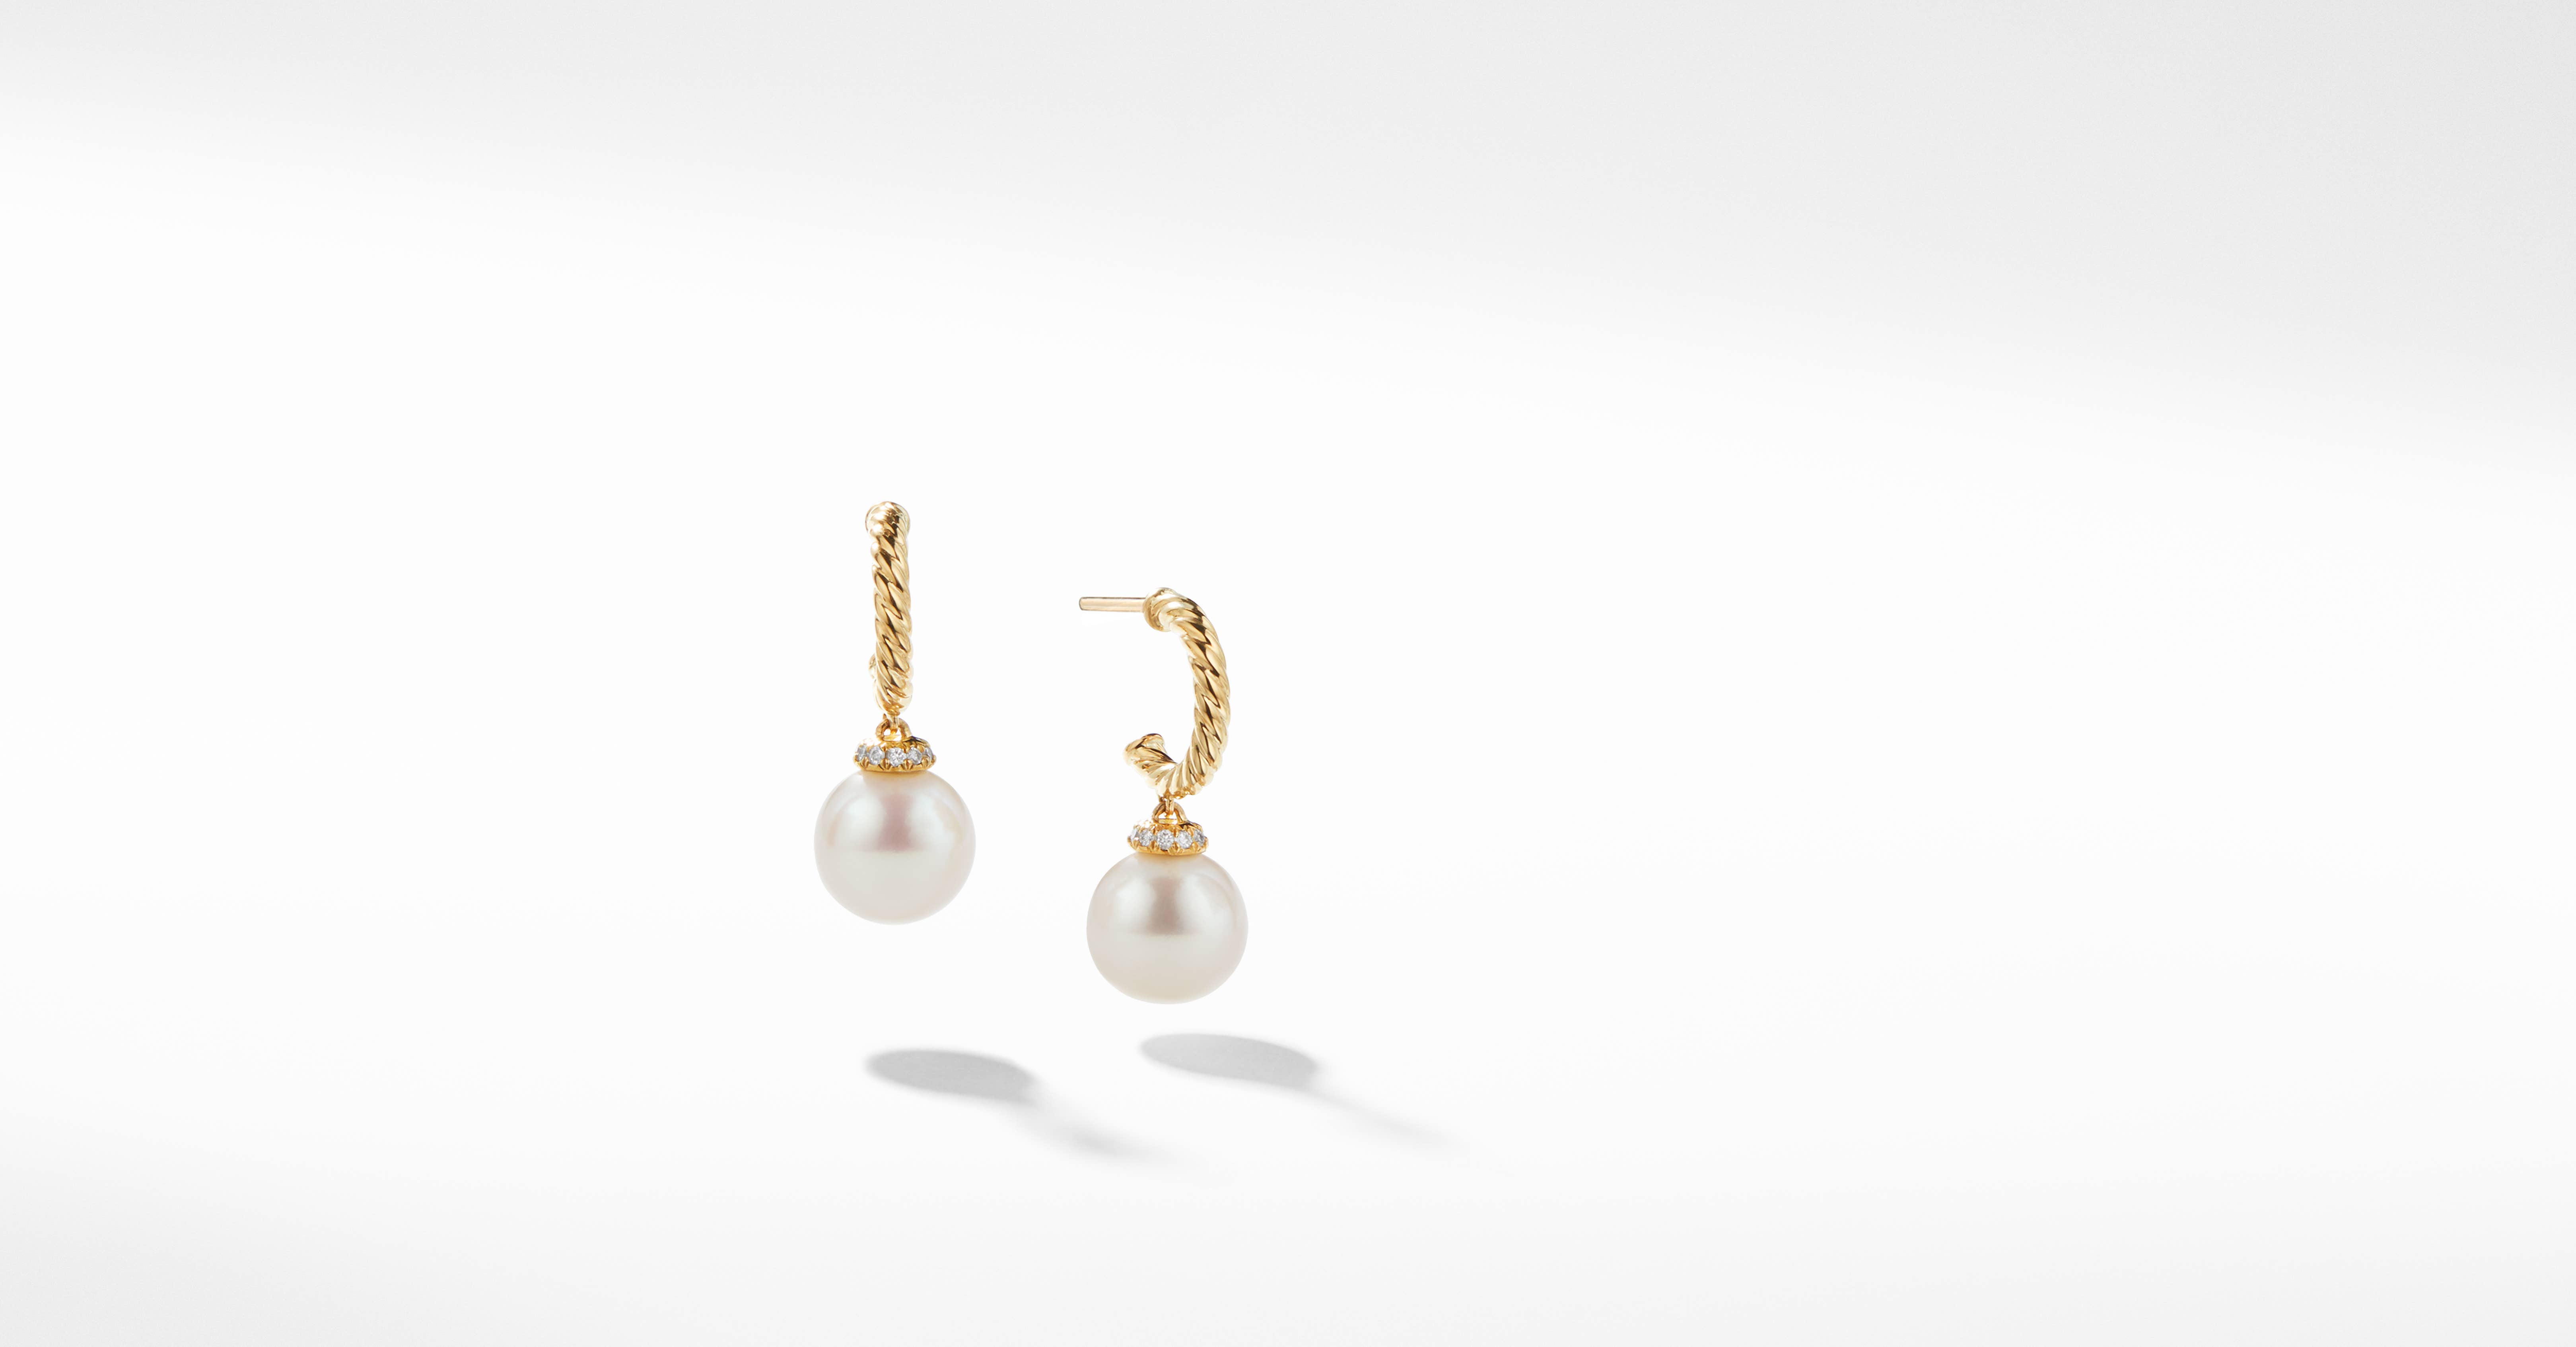 David Yurman | Solari Hoop Drop Earrings in 18K Yellow Gold with Pearls and Pavé Diamonds